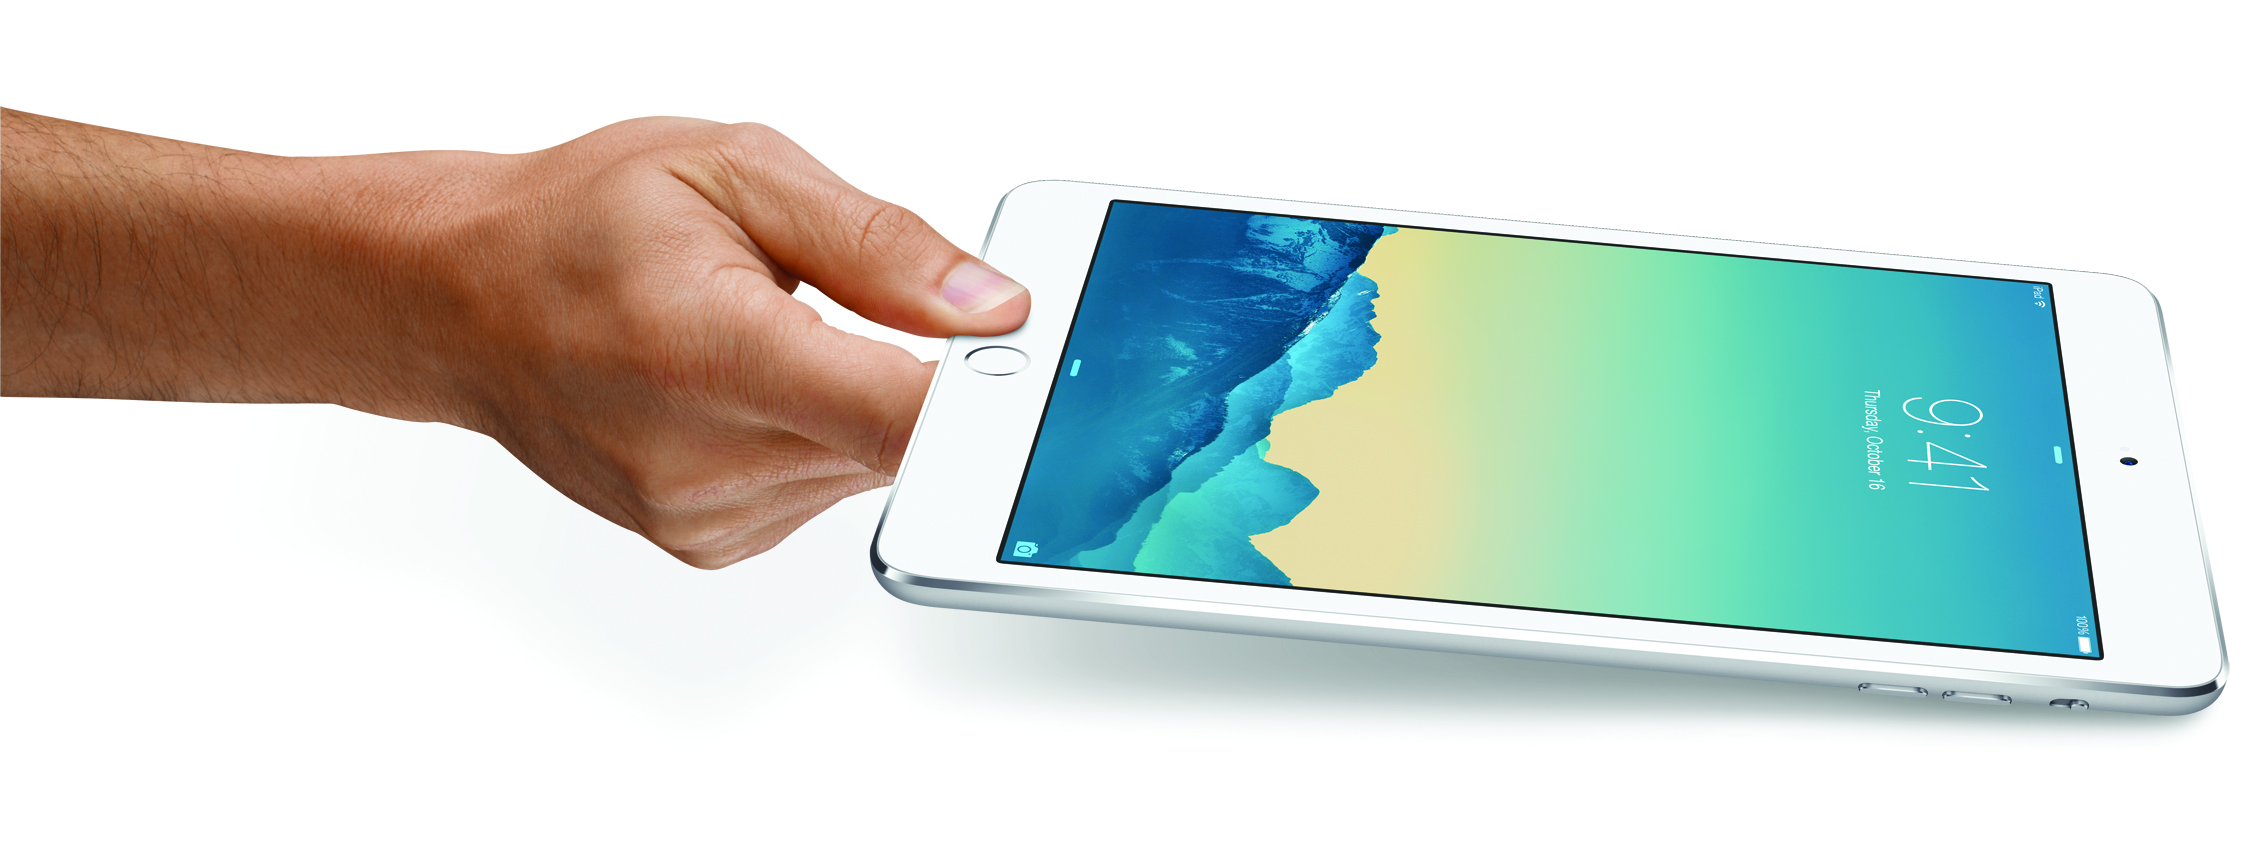 Apple iPad mini 3 128GB: Wi-Fi $300 (Orig. $599), Wi-Fi + Cellular